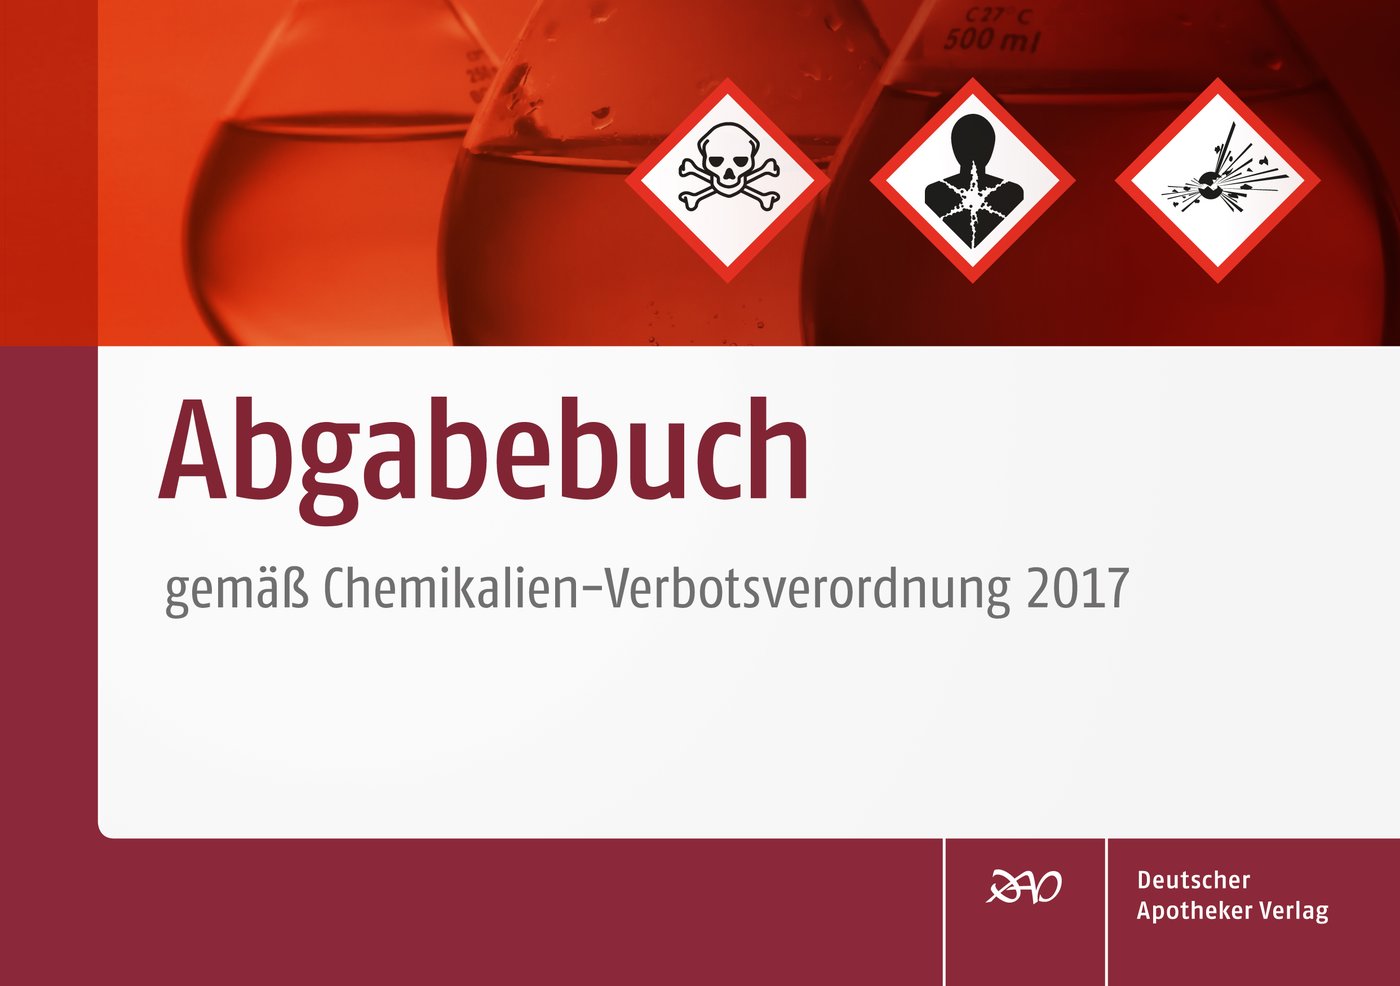 Abgabebuch gemäß Chemikalien-Verbotsverordnung 2017